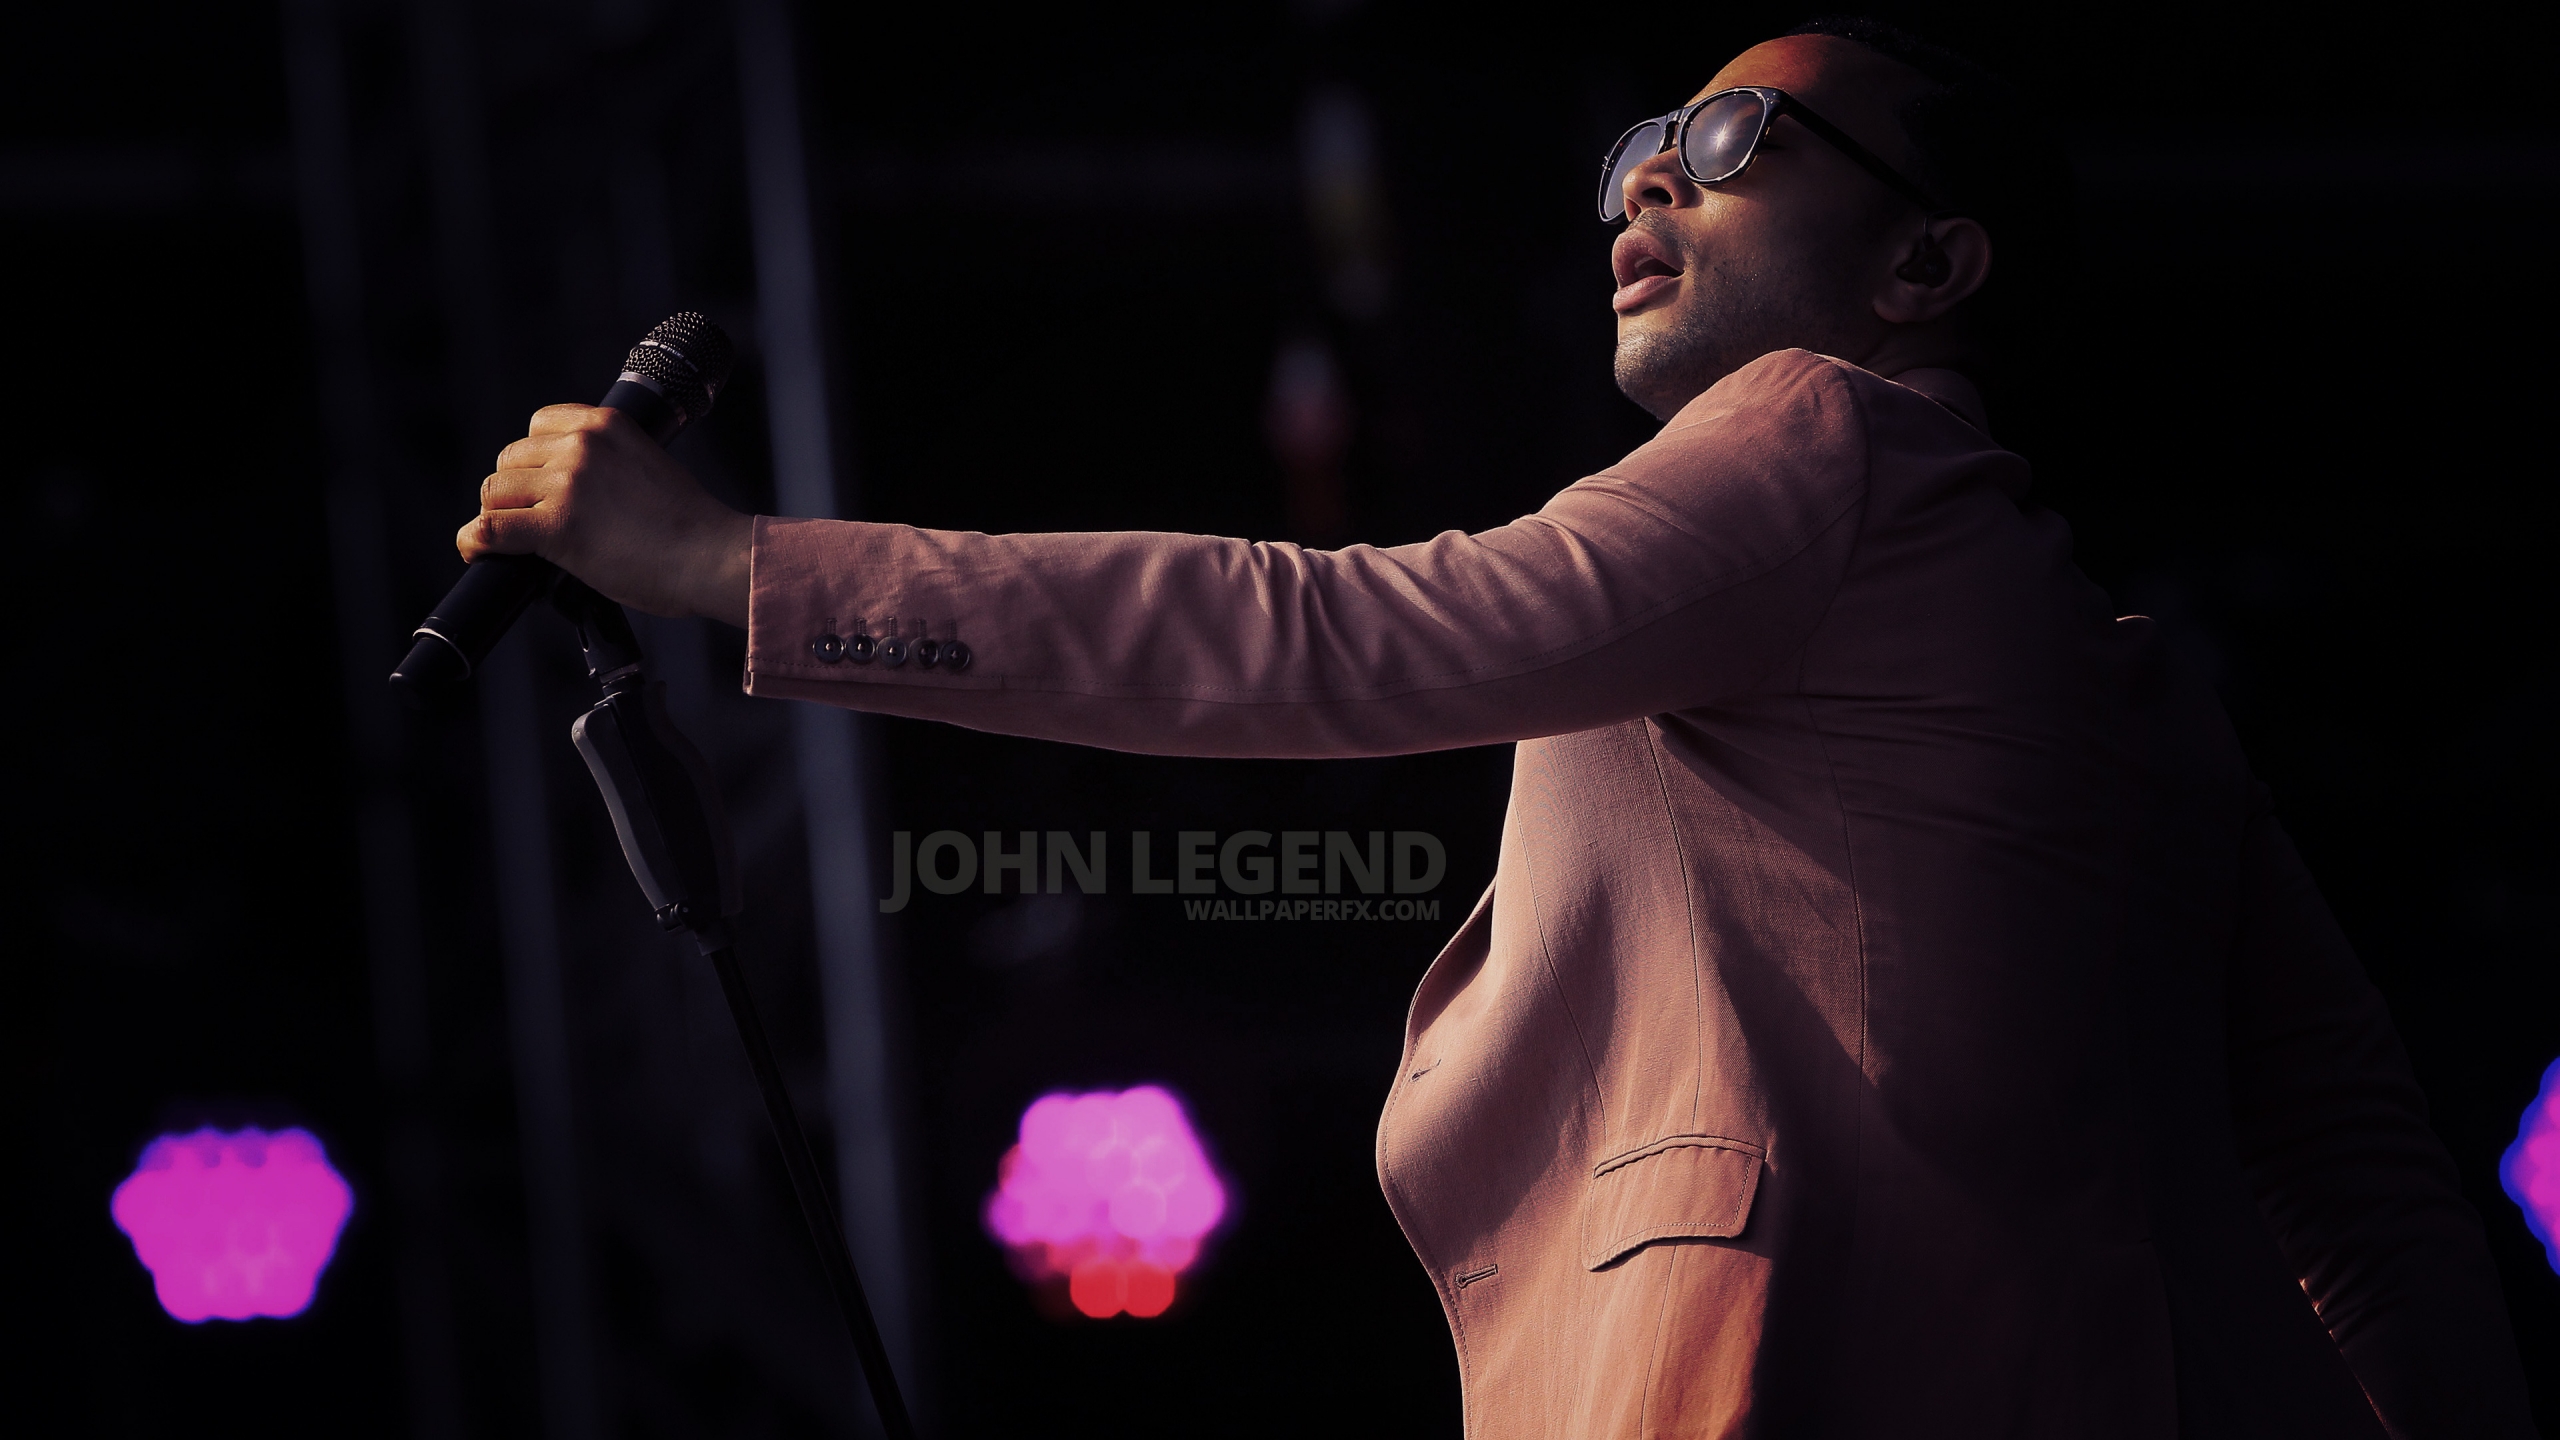 John Legend on Stage for 2560x1440 HDTV resolution